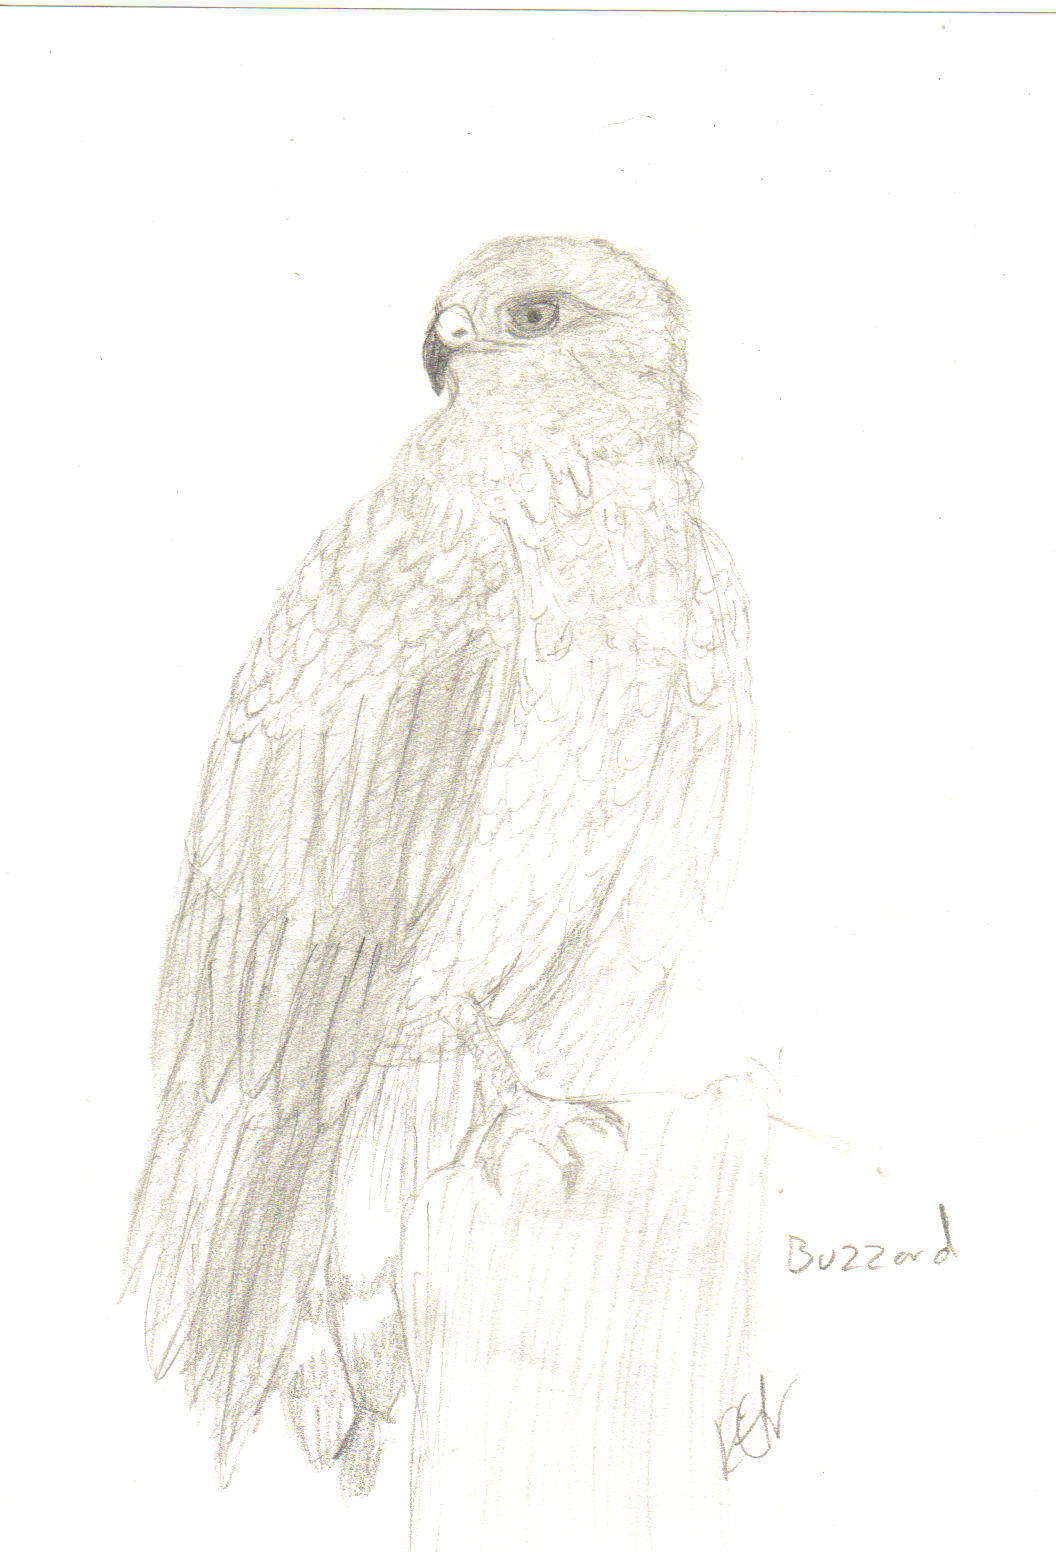 Buzzard (bird of prey) by Fluffybunny